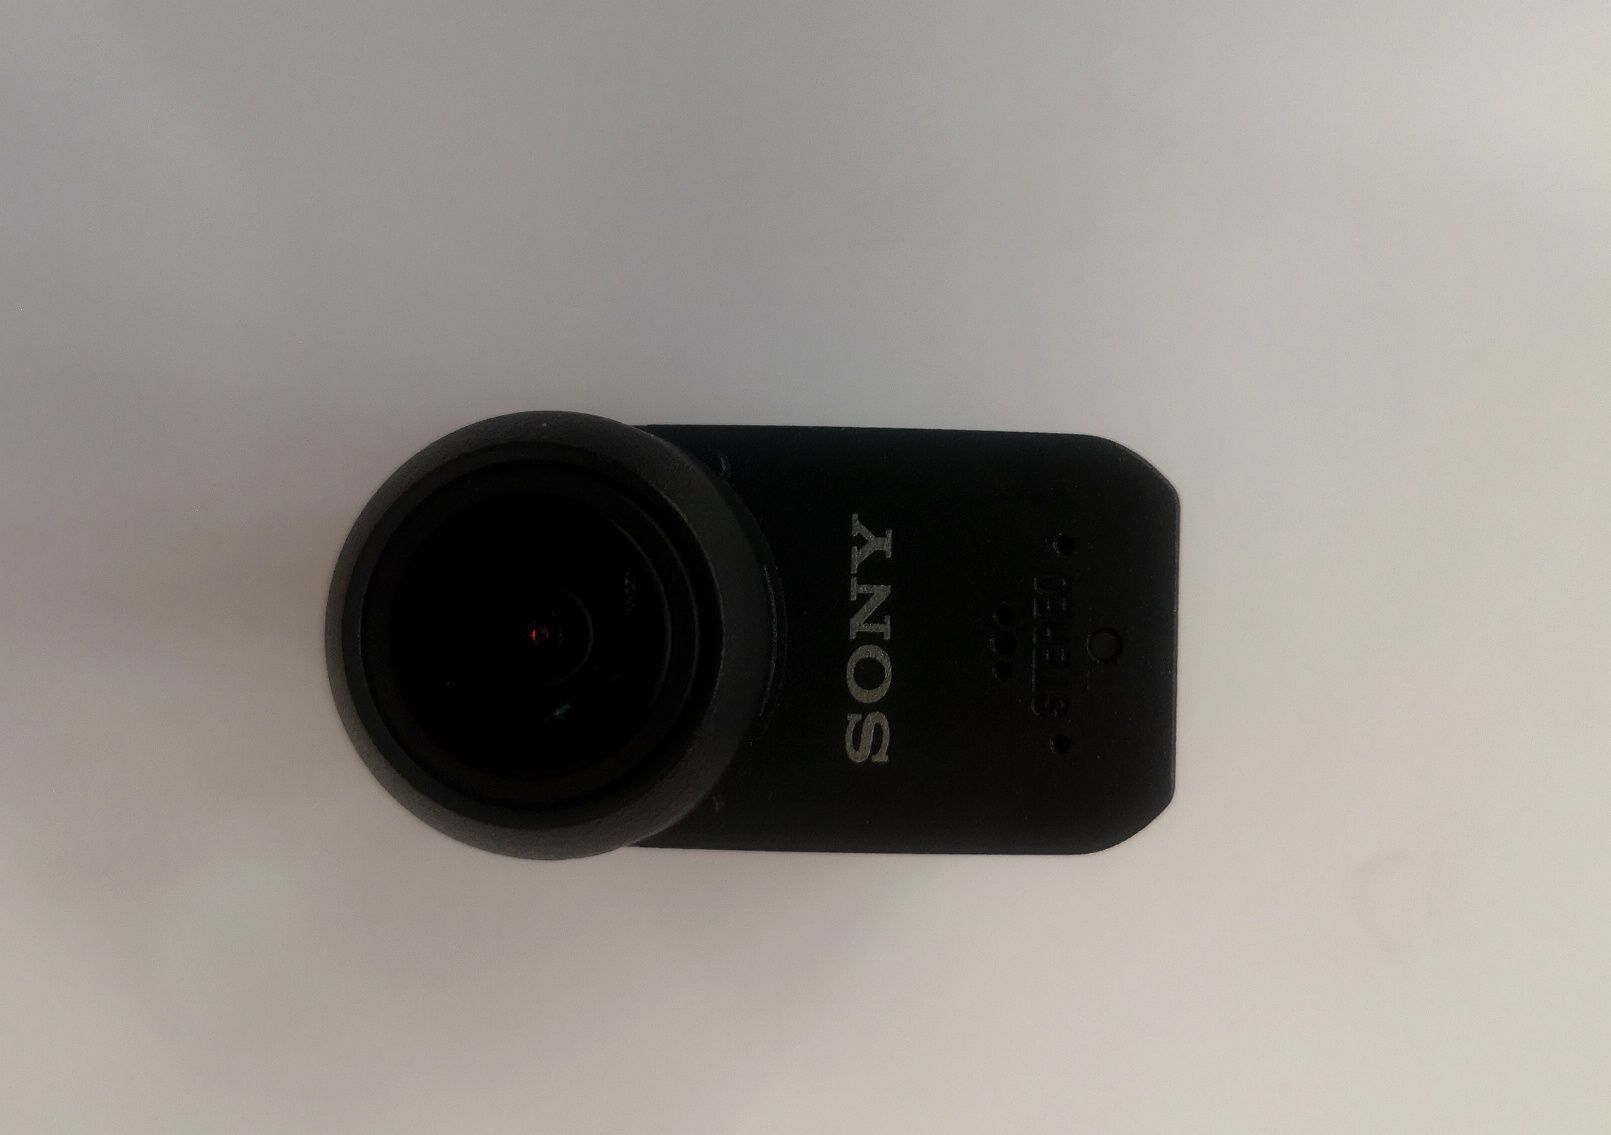 Super kamera sportowa Sony HDR-AS50